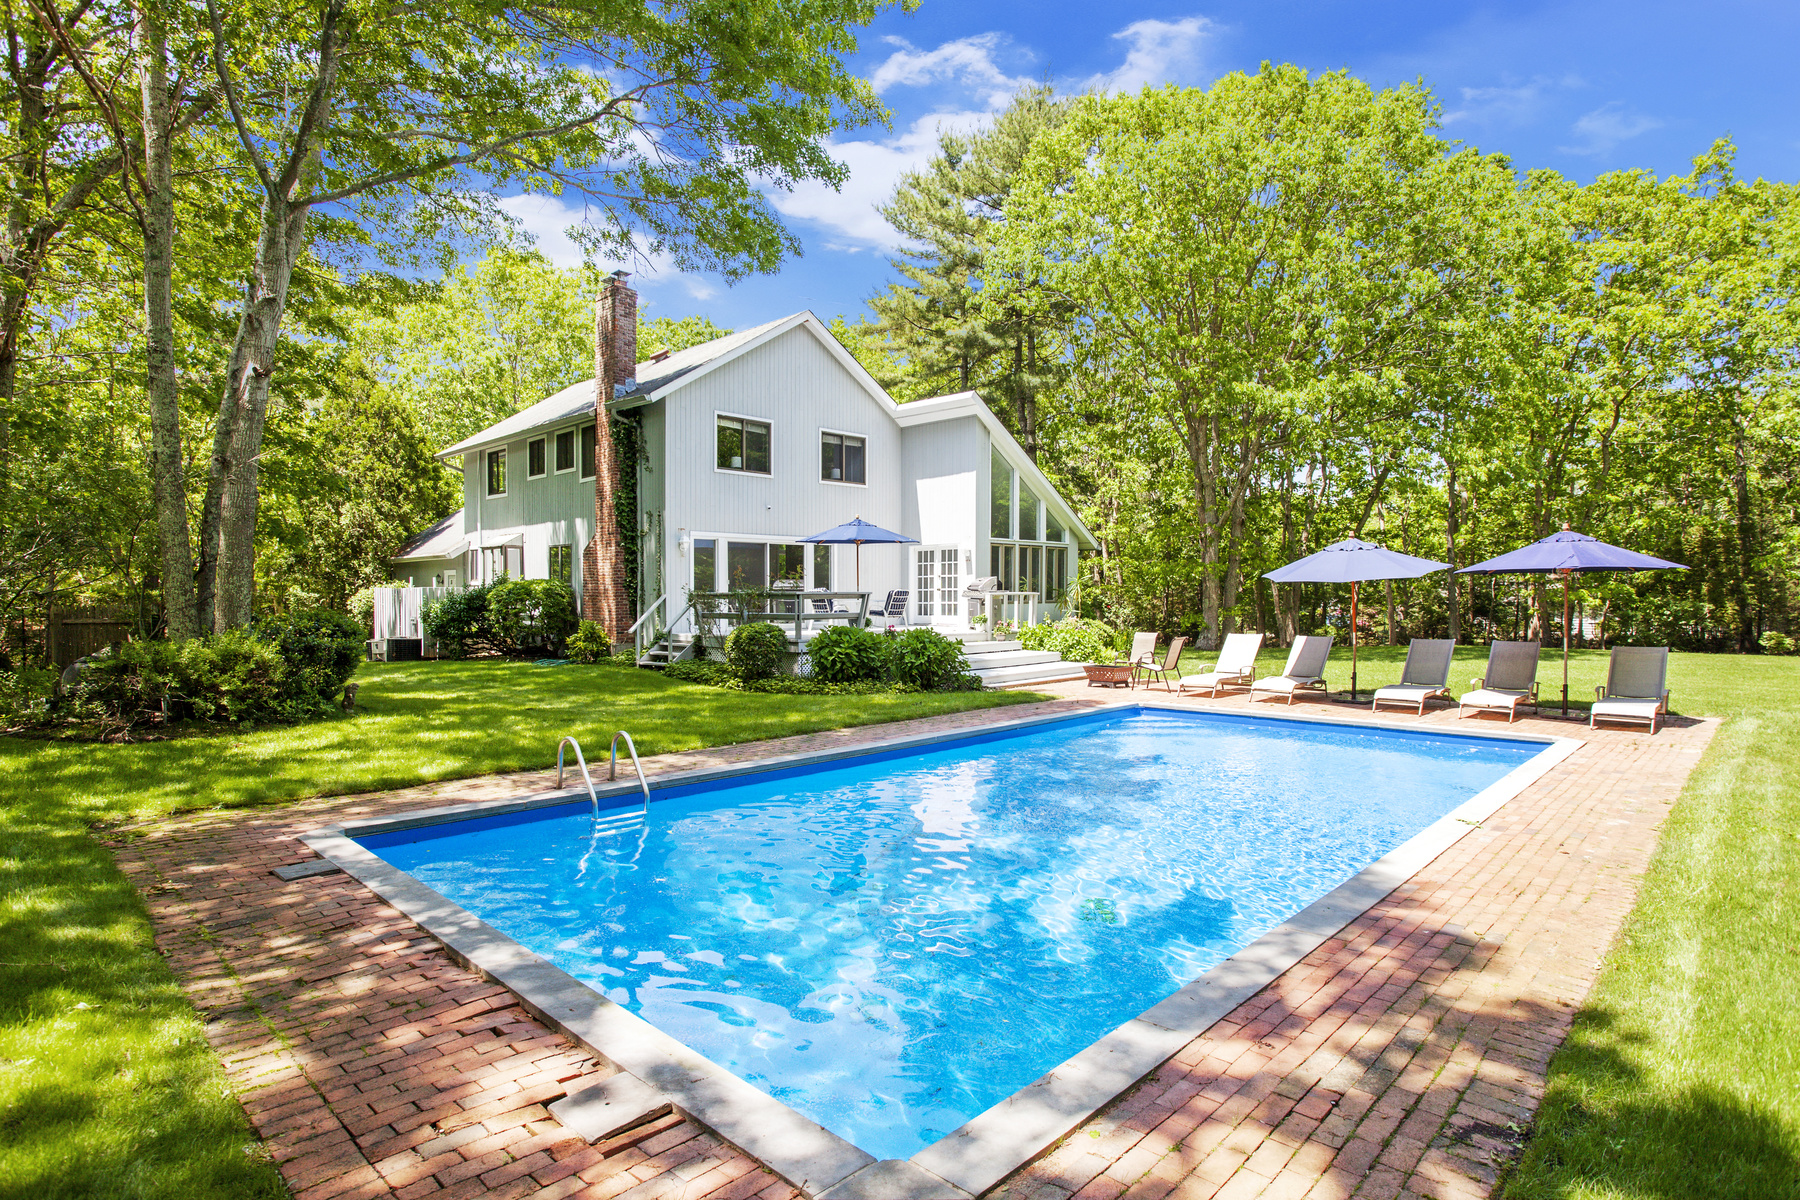 Rental Property at 468 Water Mill Towd Road, Southampton, Hamptons, NY - Bedrooms: 3 
Bathrooms: 2.5  - $34,000 MO.